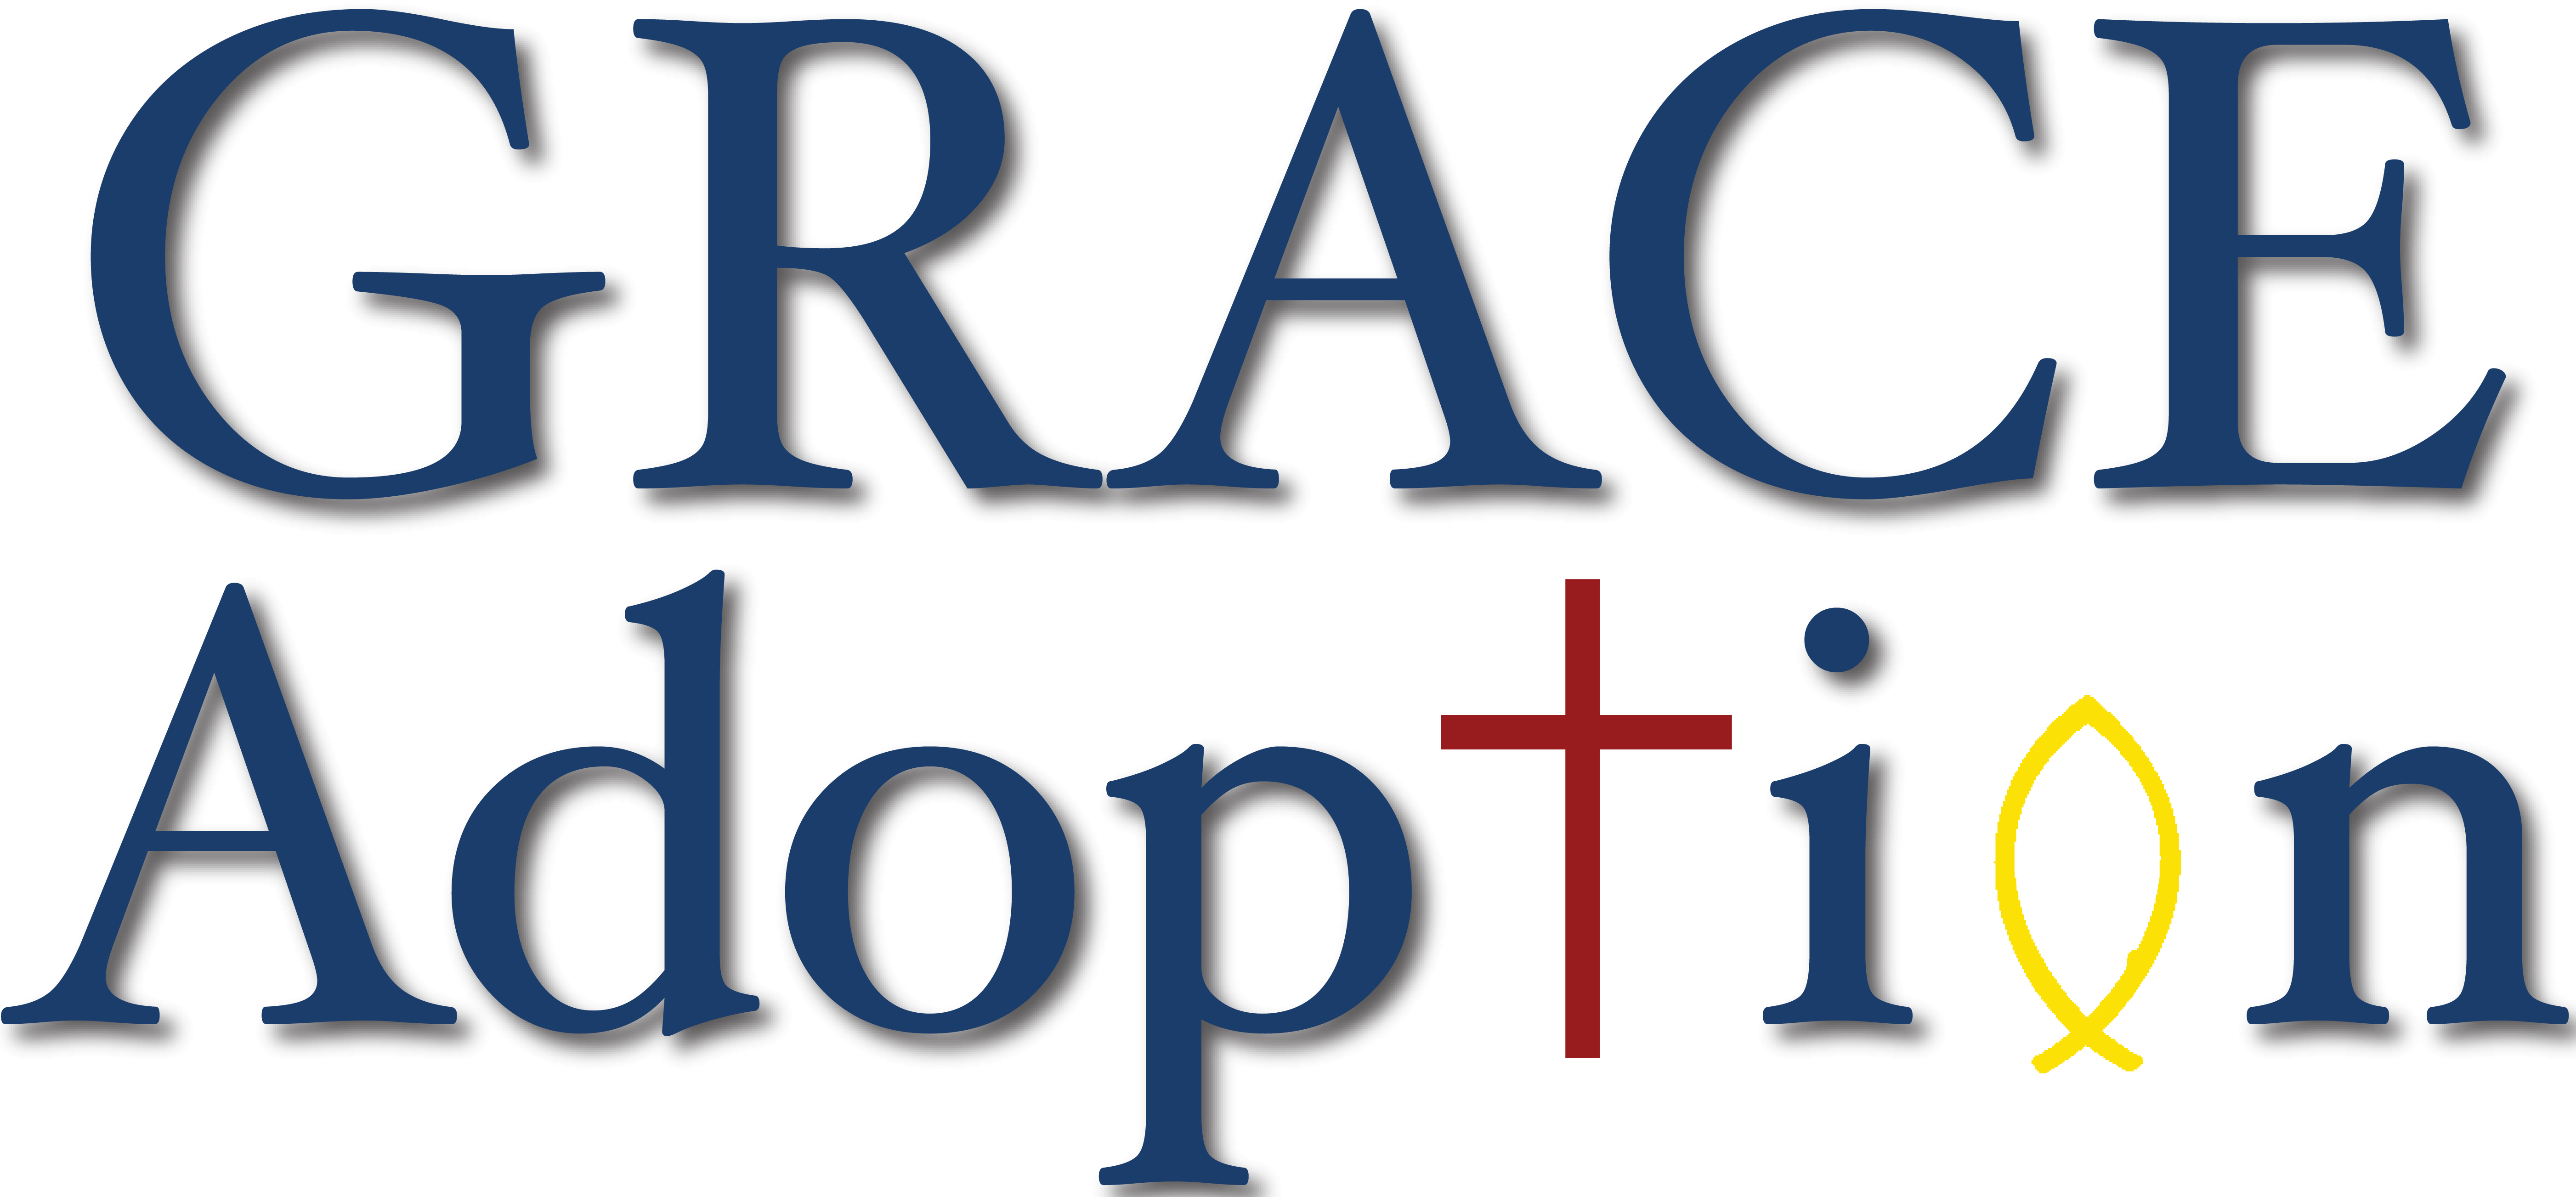 Grace Adoption, Inc. Logo